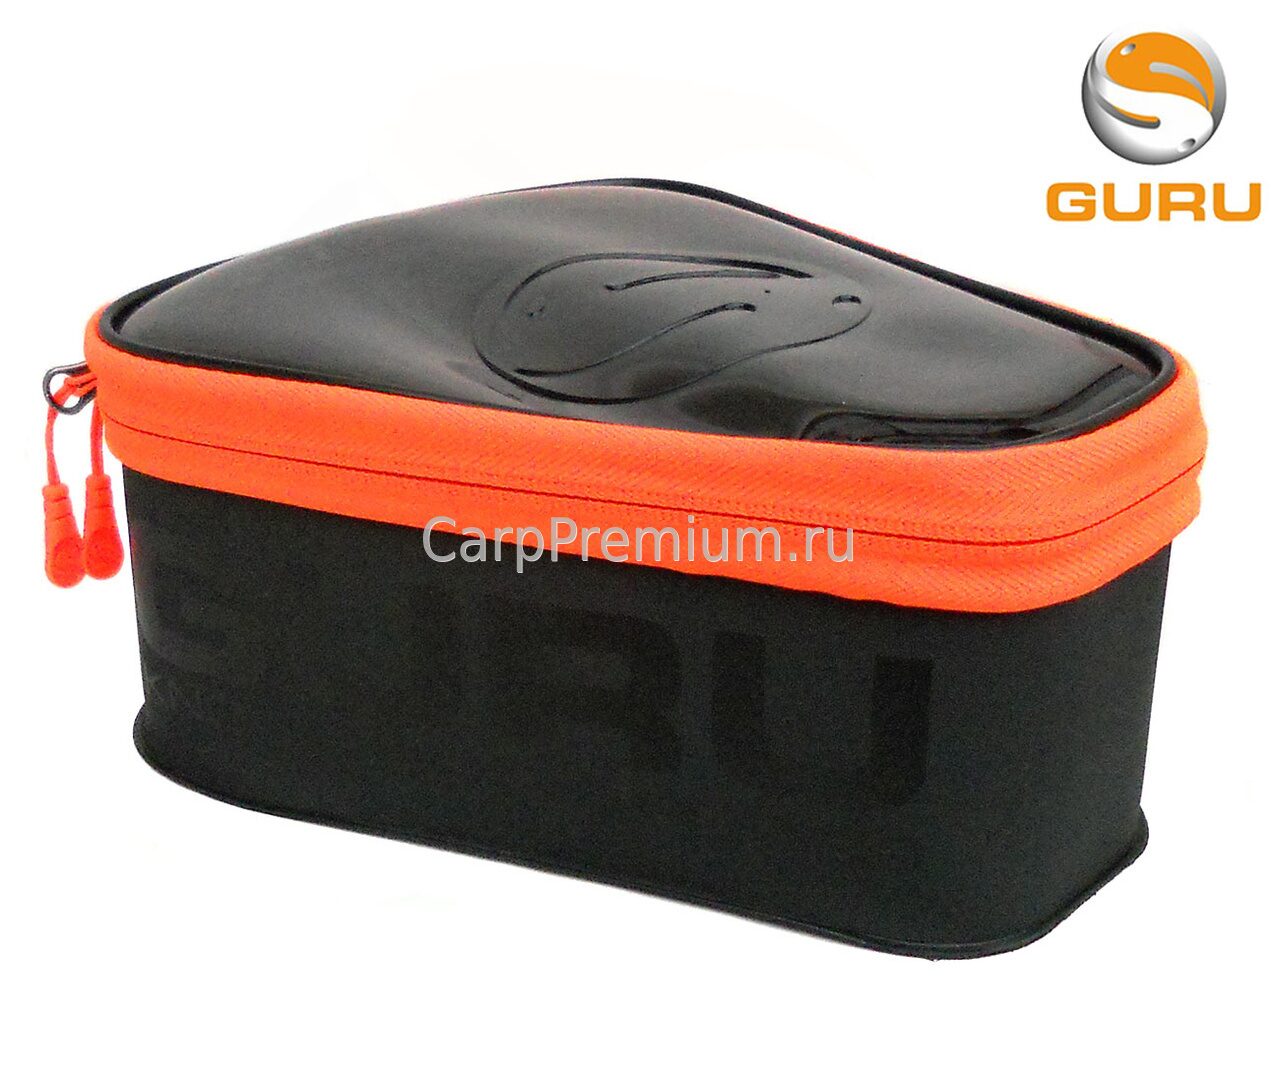 Коробка для рогаток Guru (Гуру) - Fusion Catapult Bag